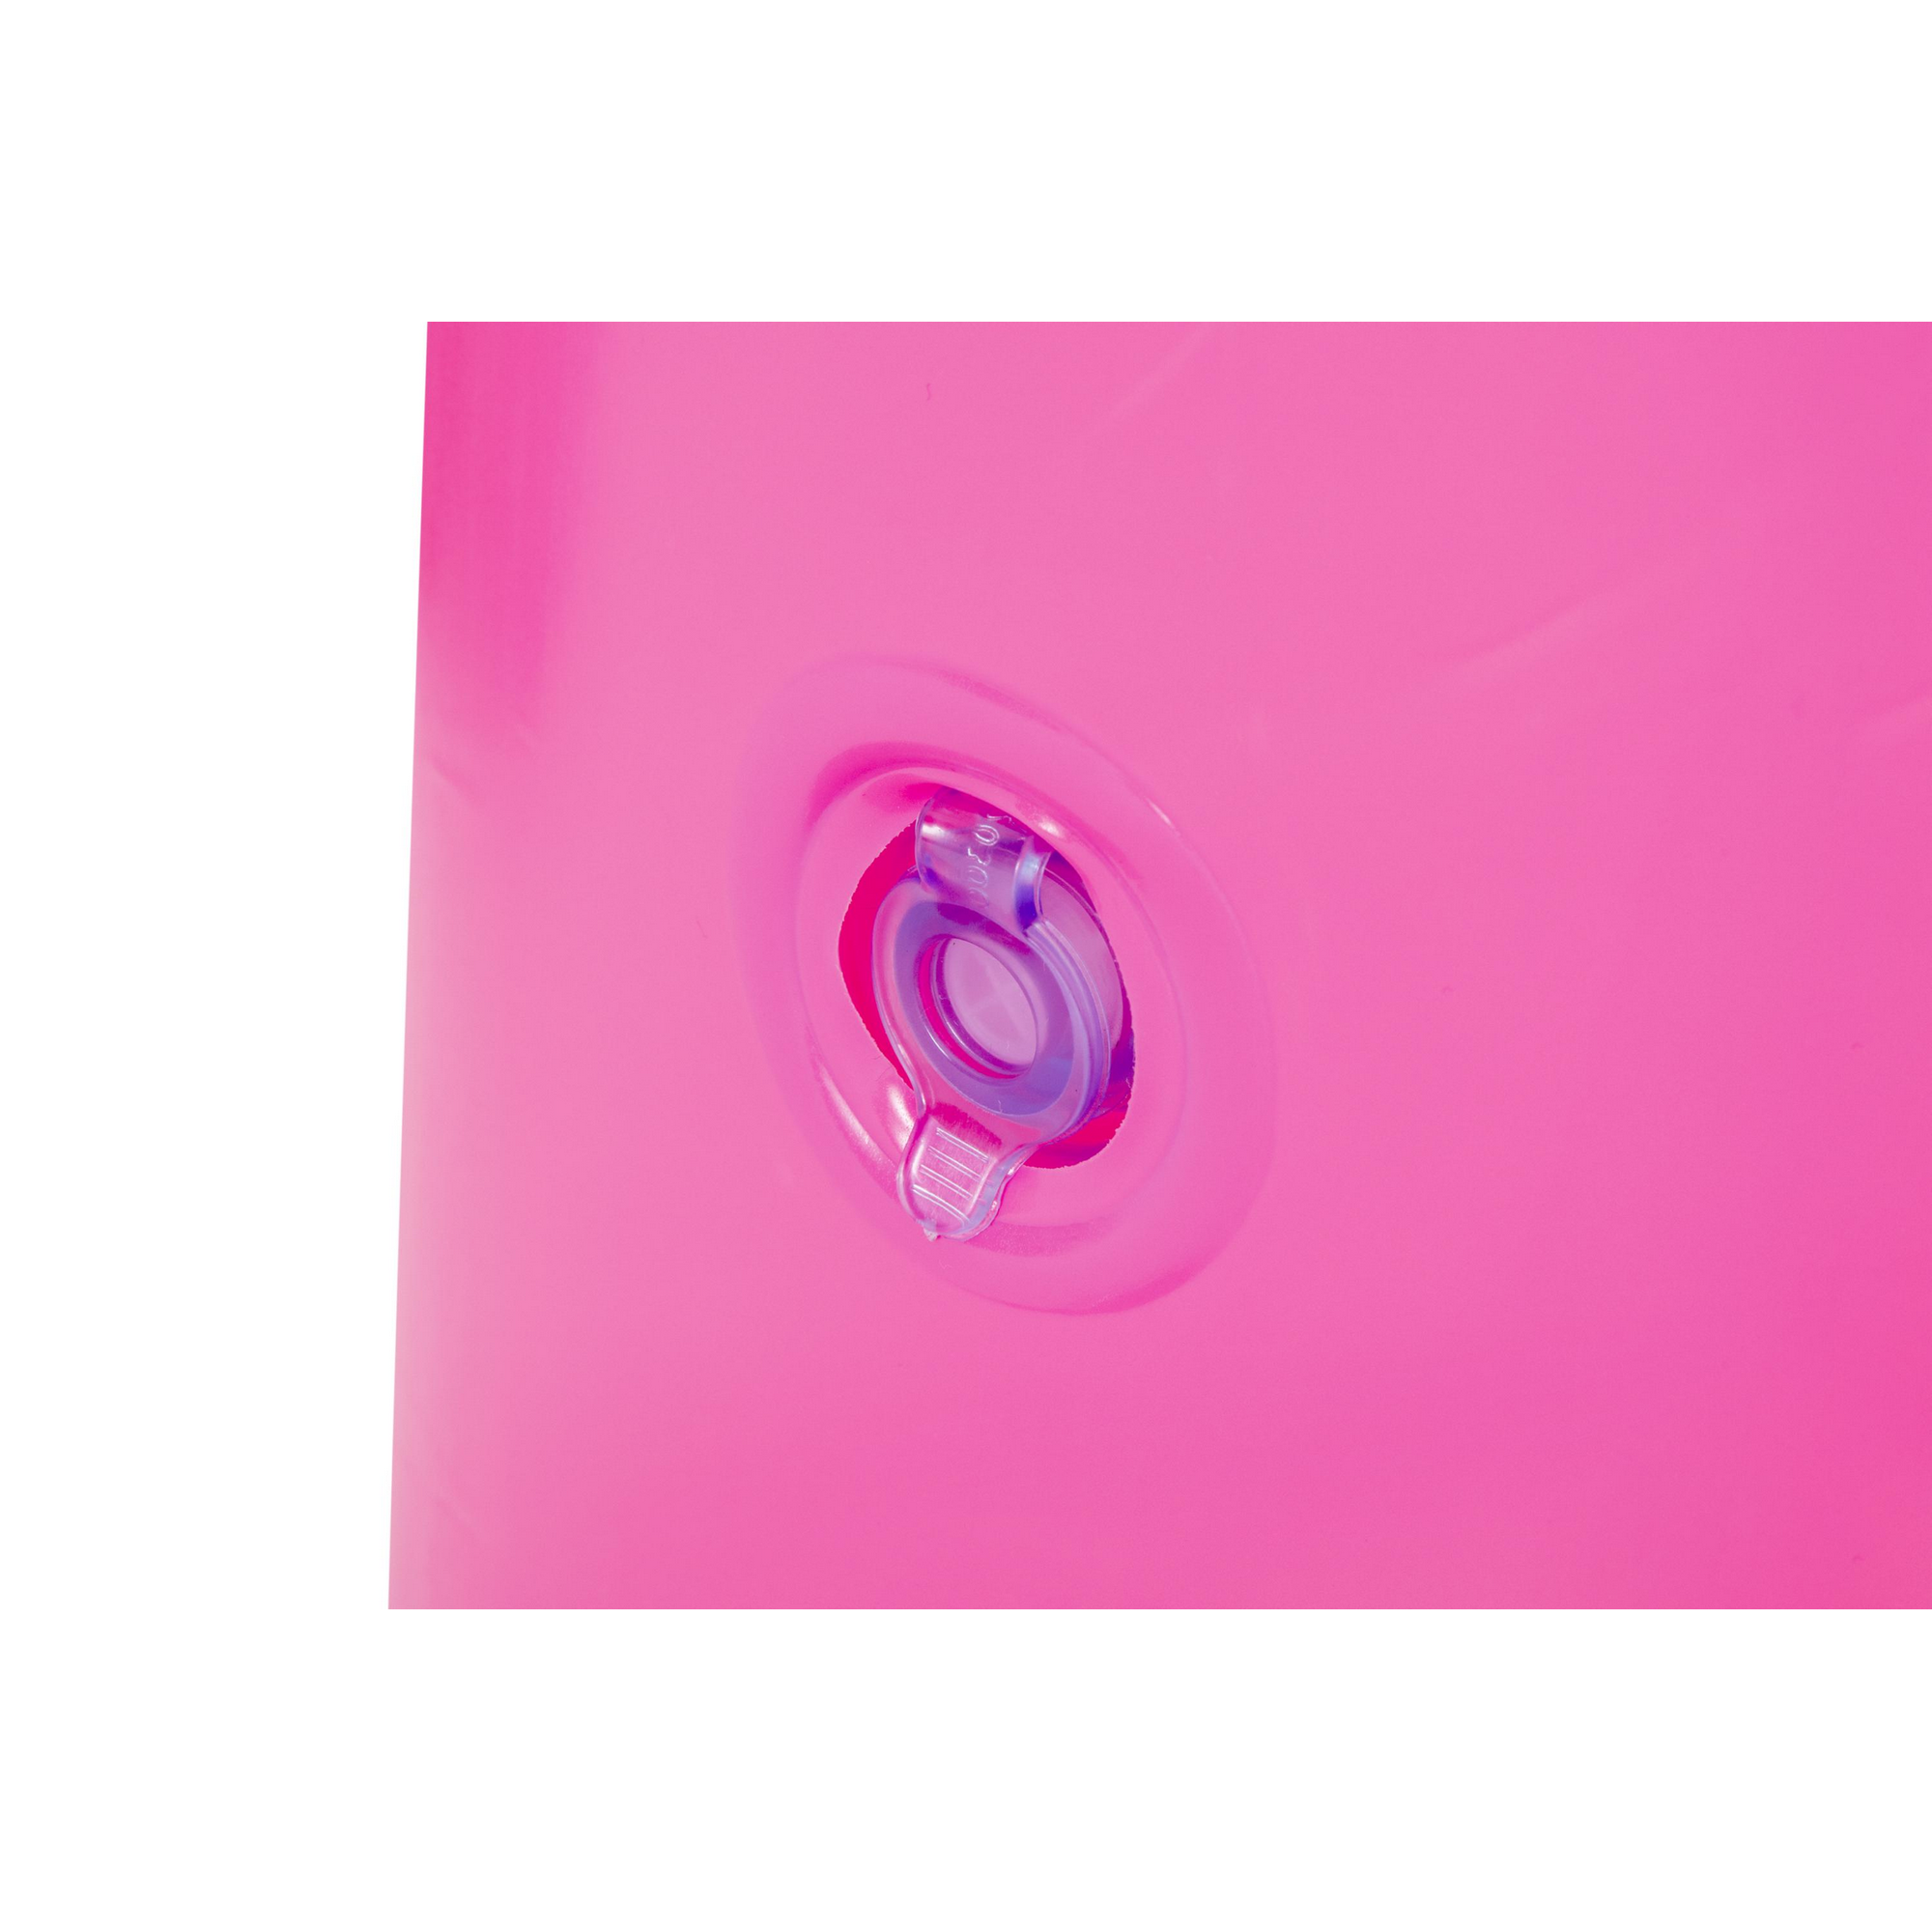 Jumbo Wassersprinkler 'Flamingo' pink 340 x 110 x 192 cm + product picture